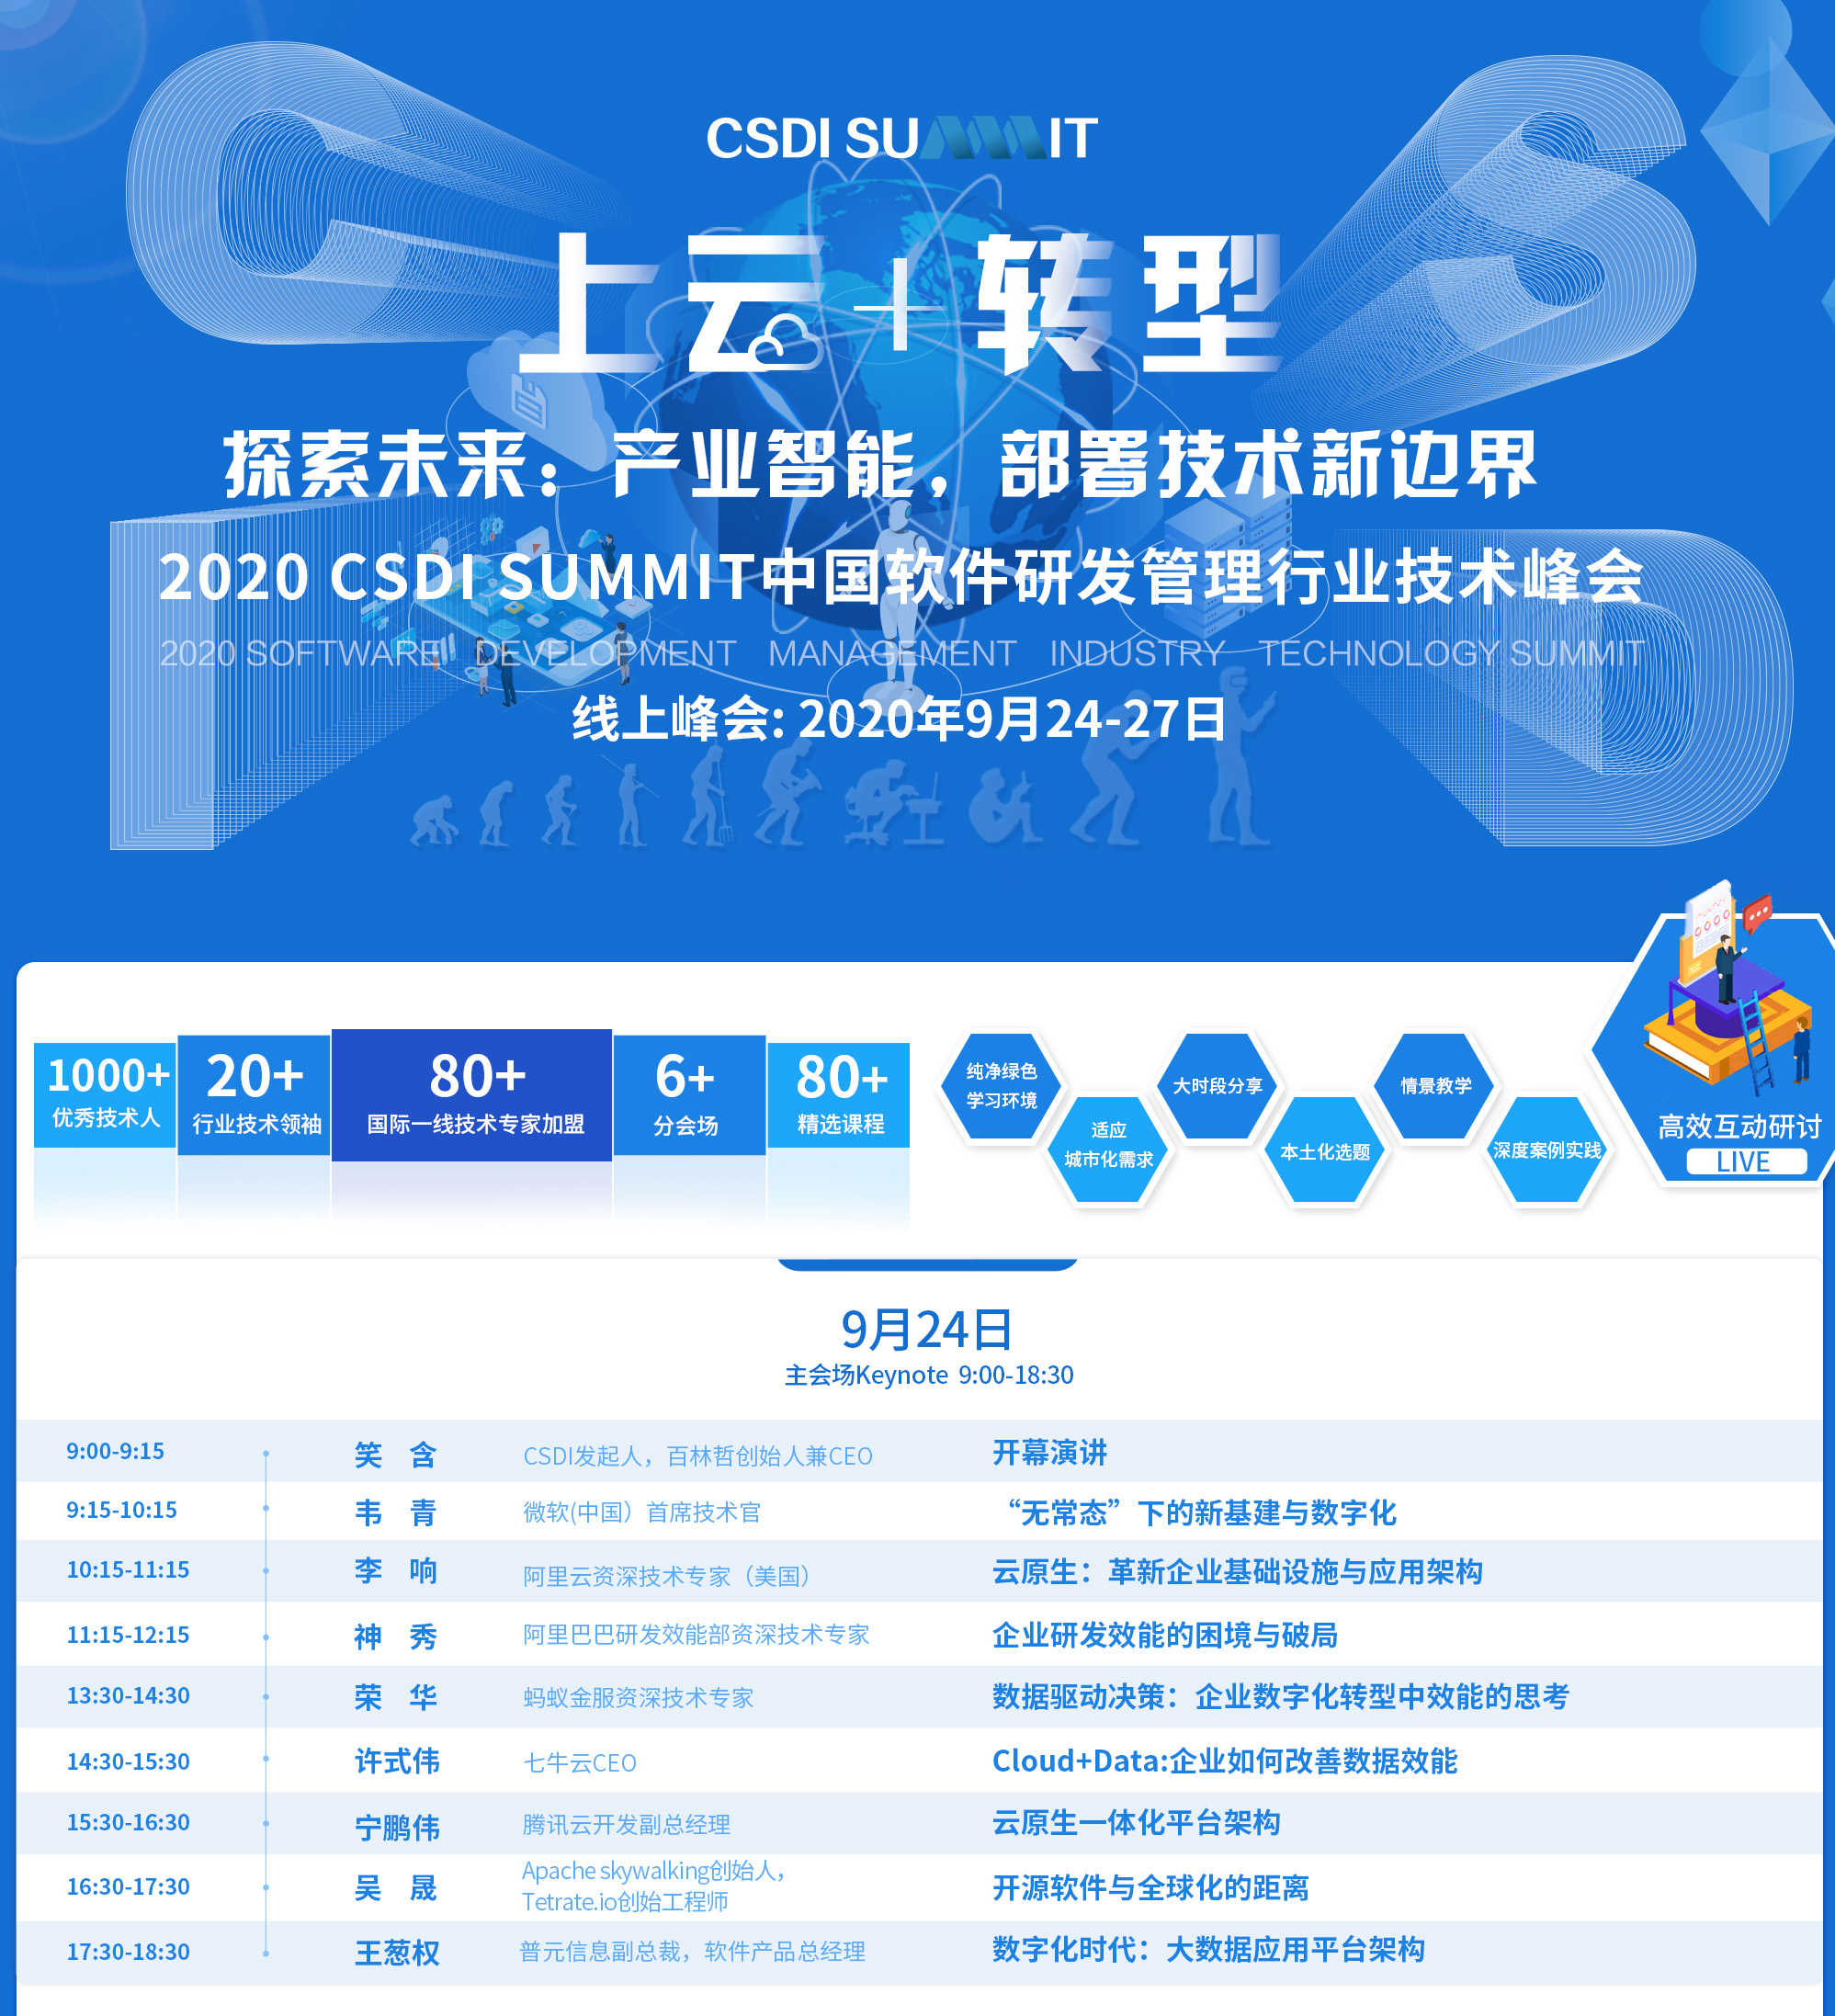 2020 CSDI SUMMIT中国软件研发管理行业技术峰会